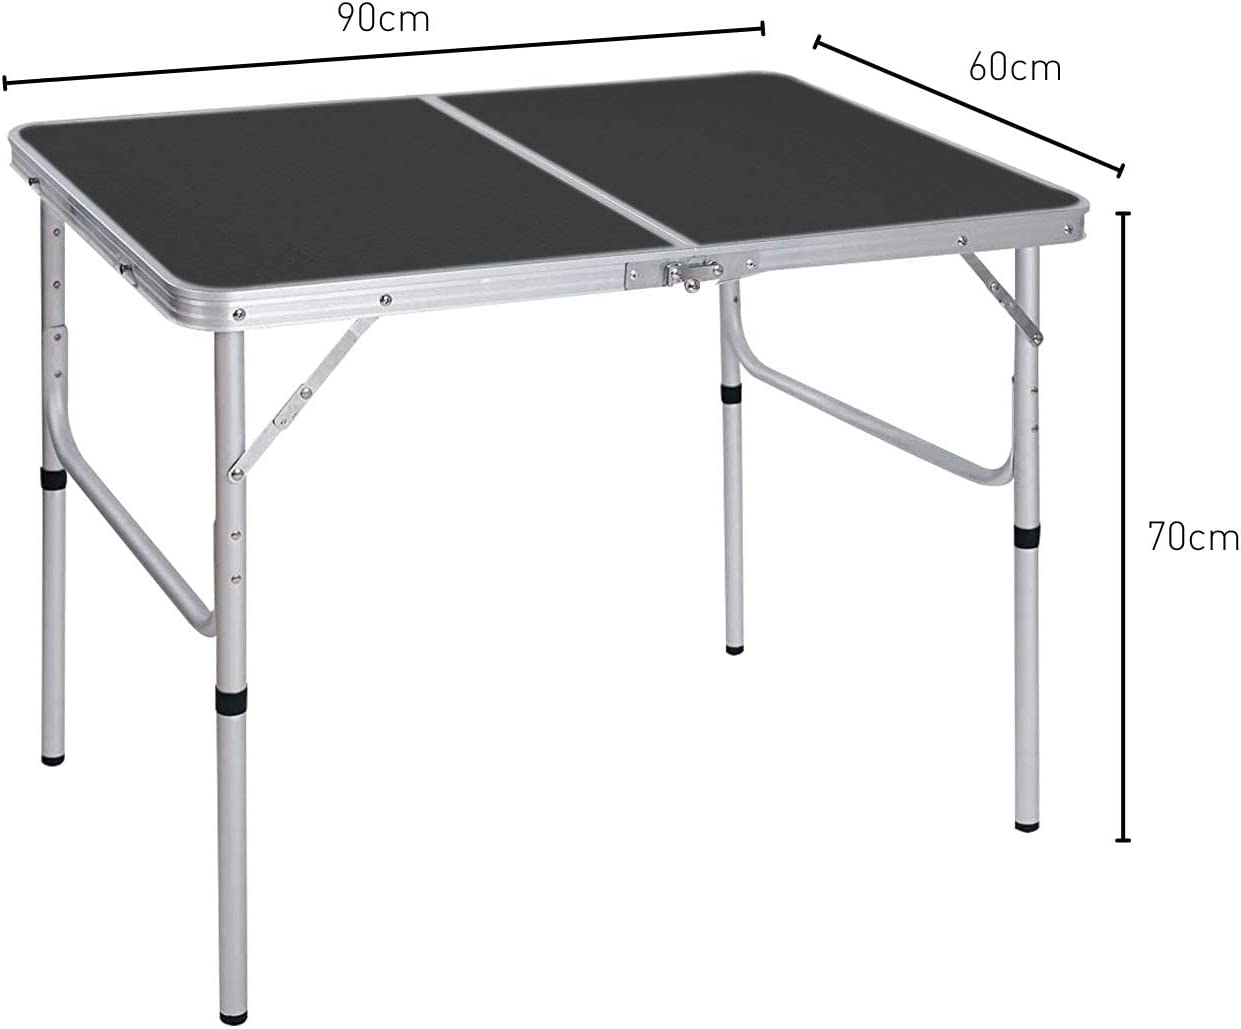 KILIROO Camping Table 90cm Black